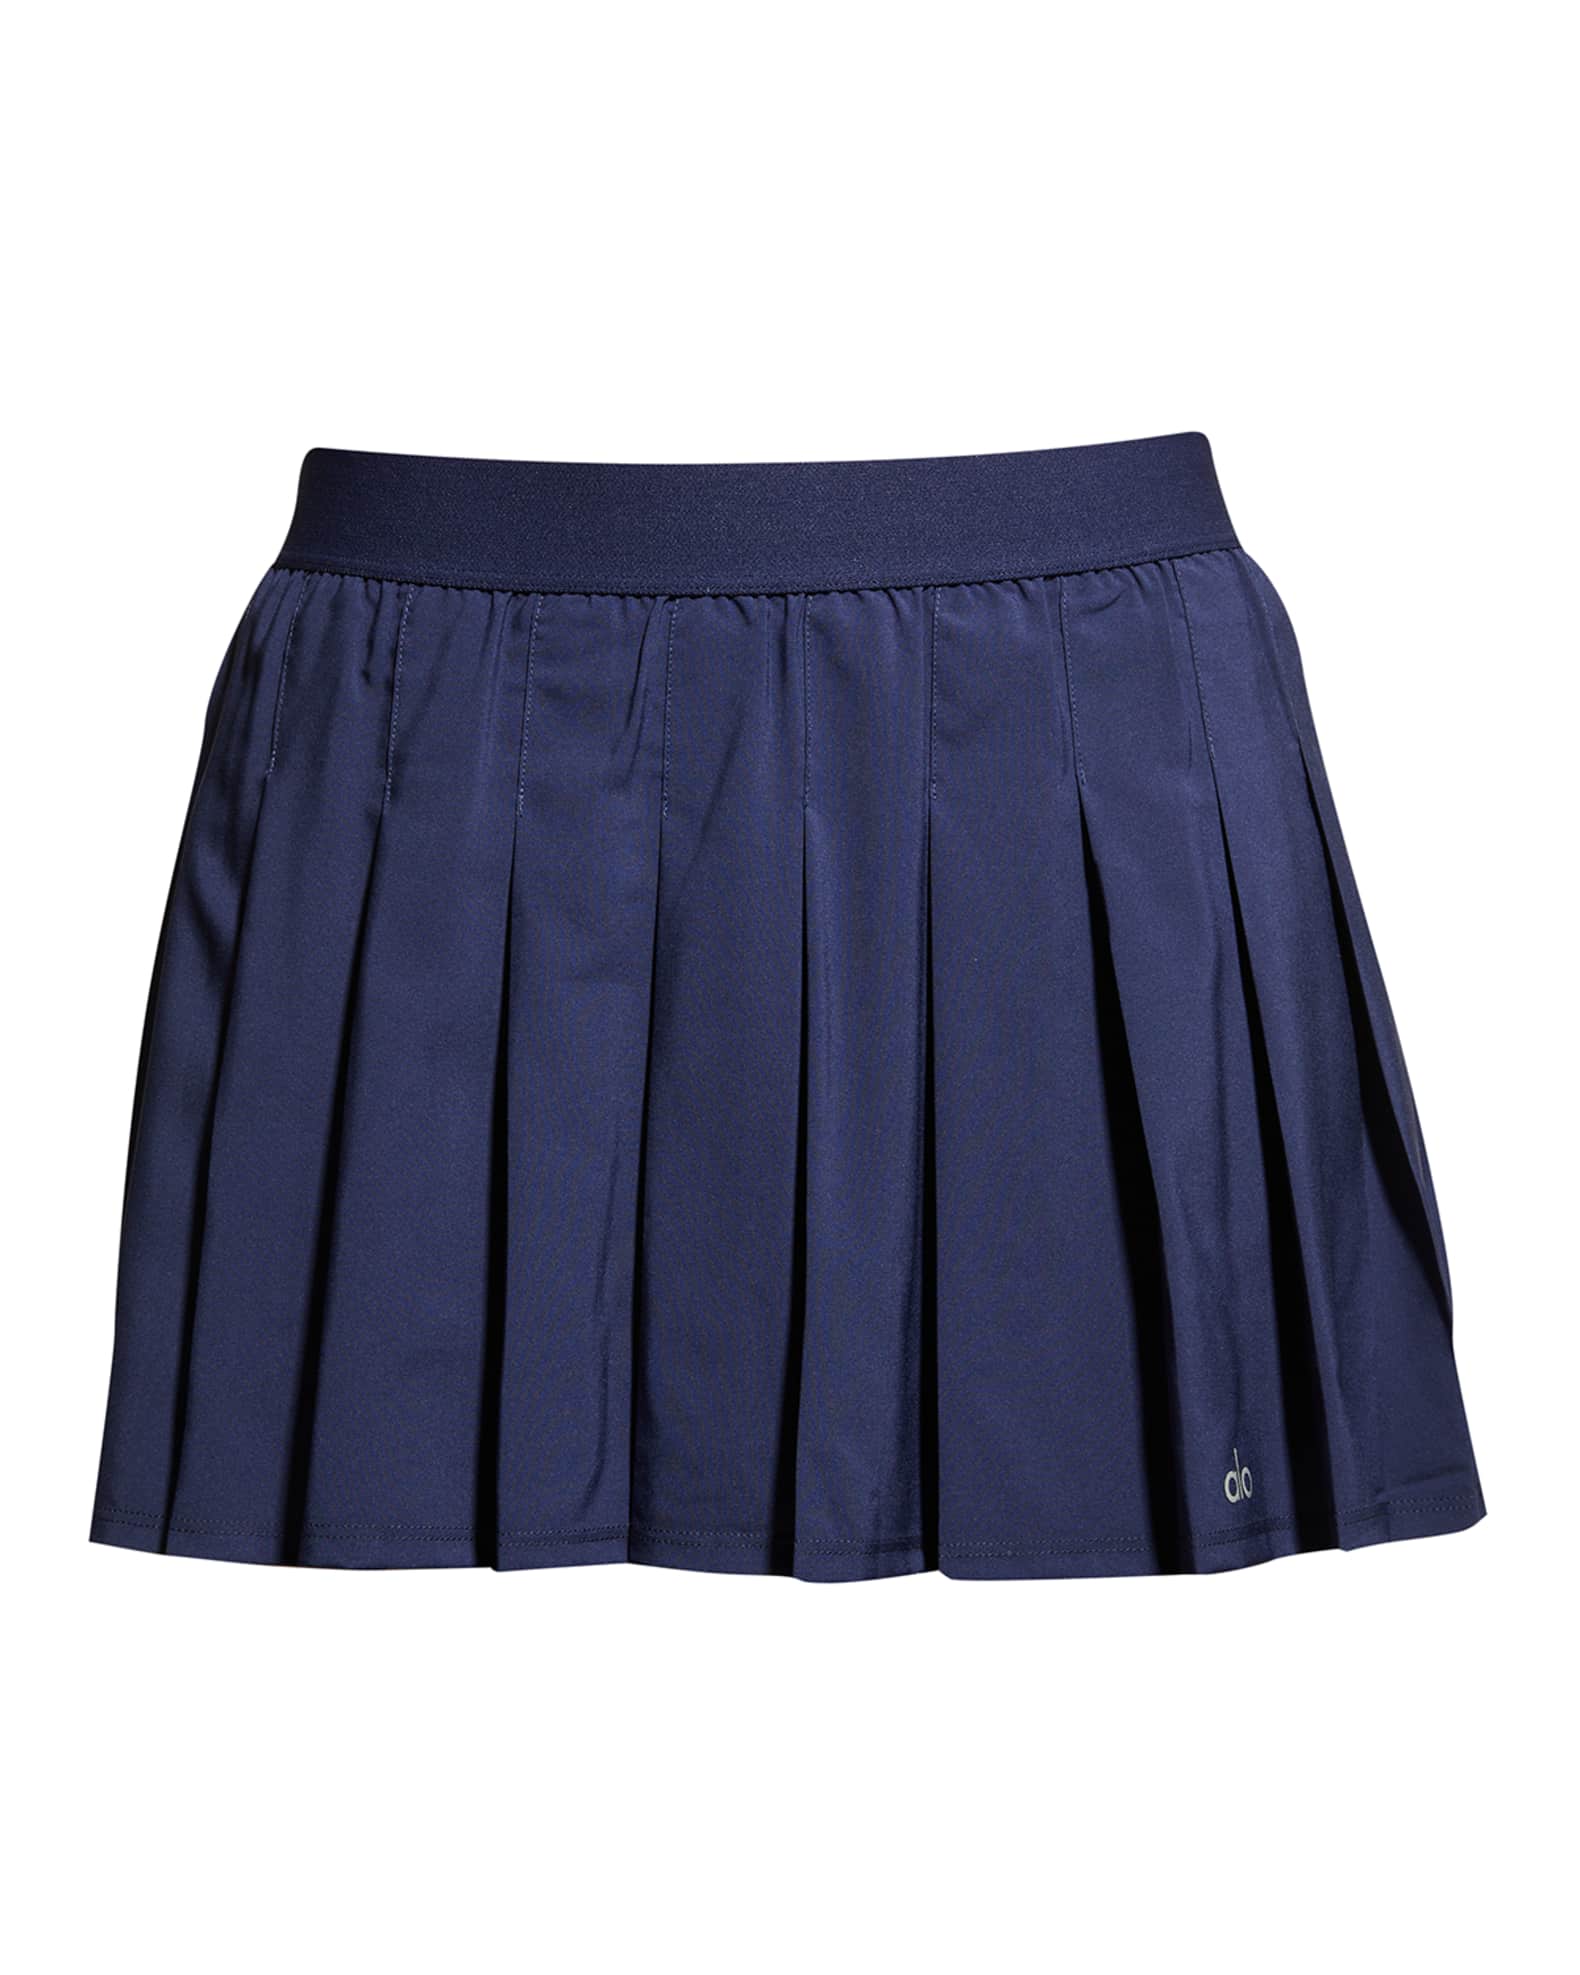 Alo Yoga Varsity Tennis Mini Skirt | Neiman Marcus